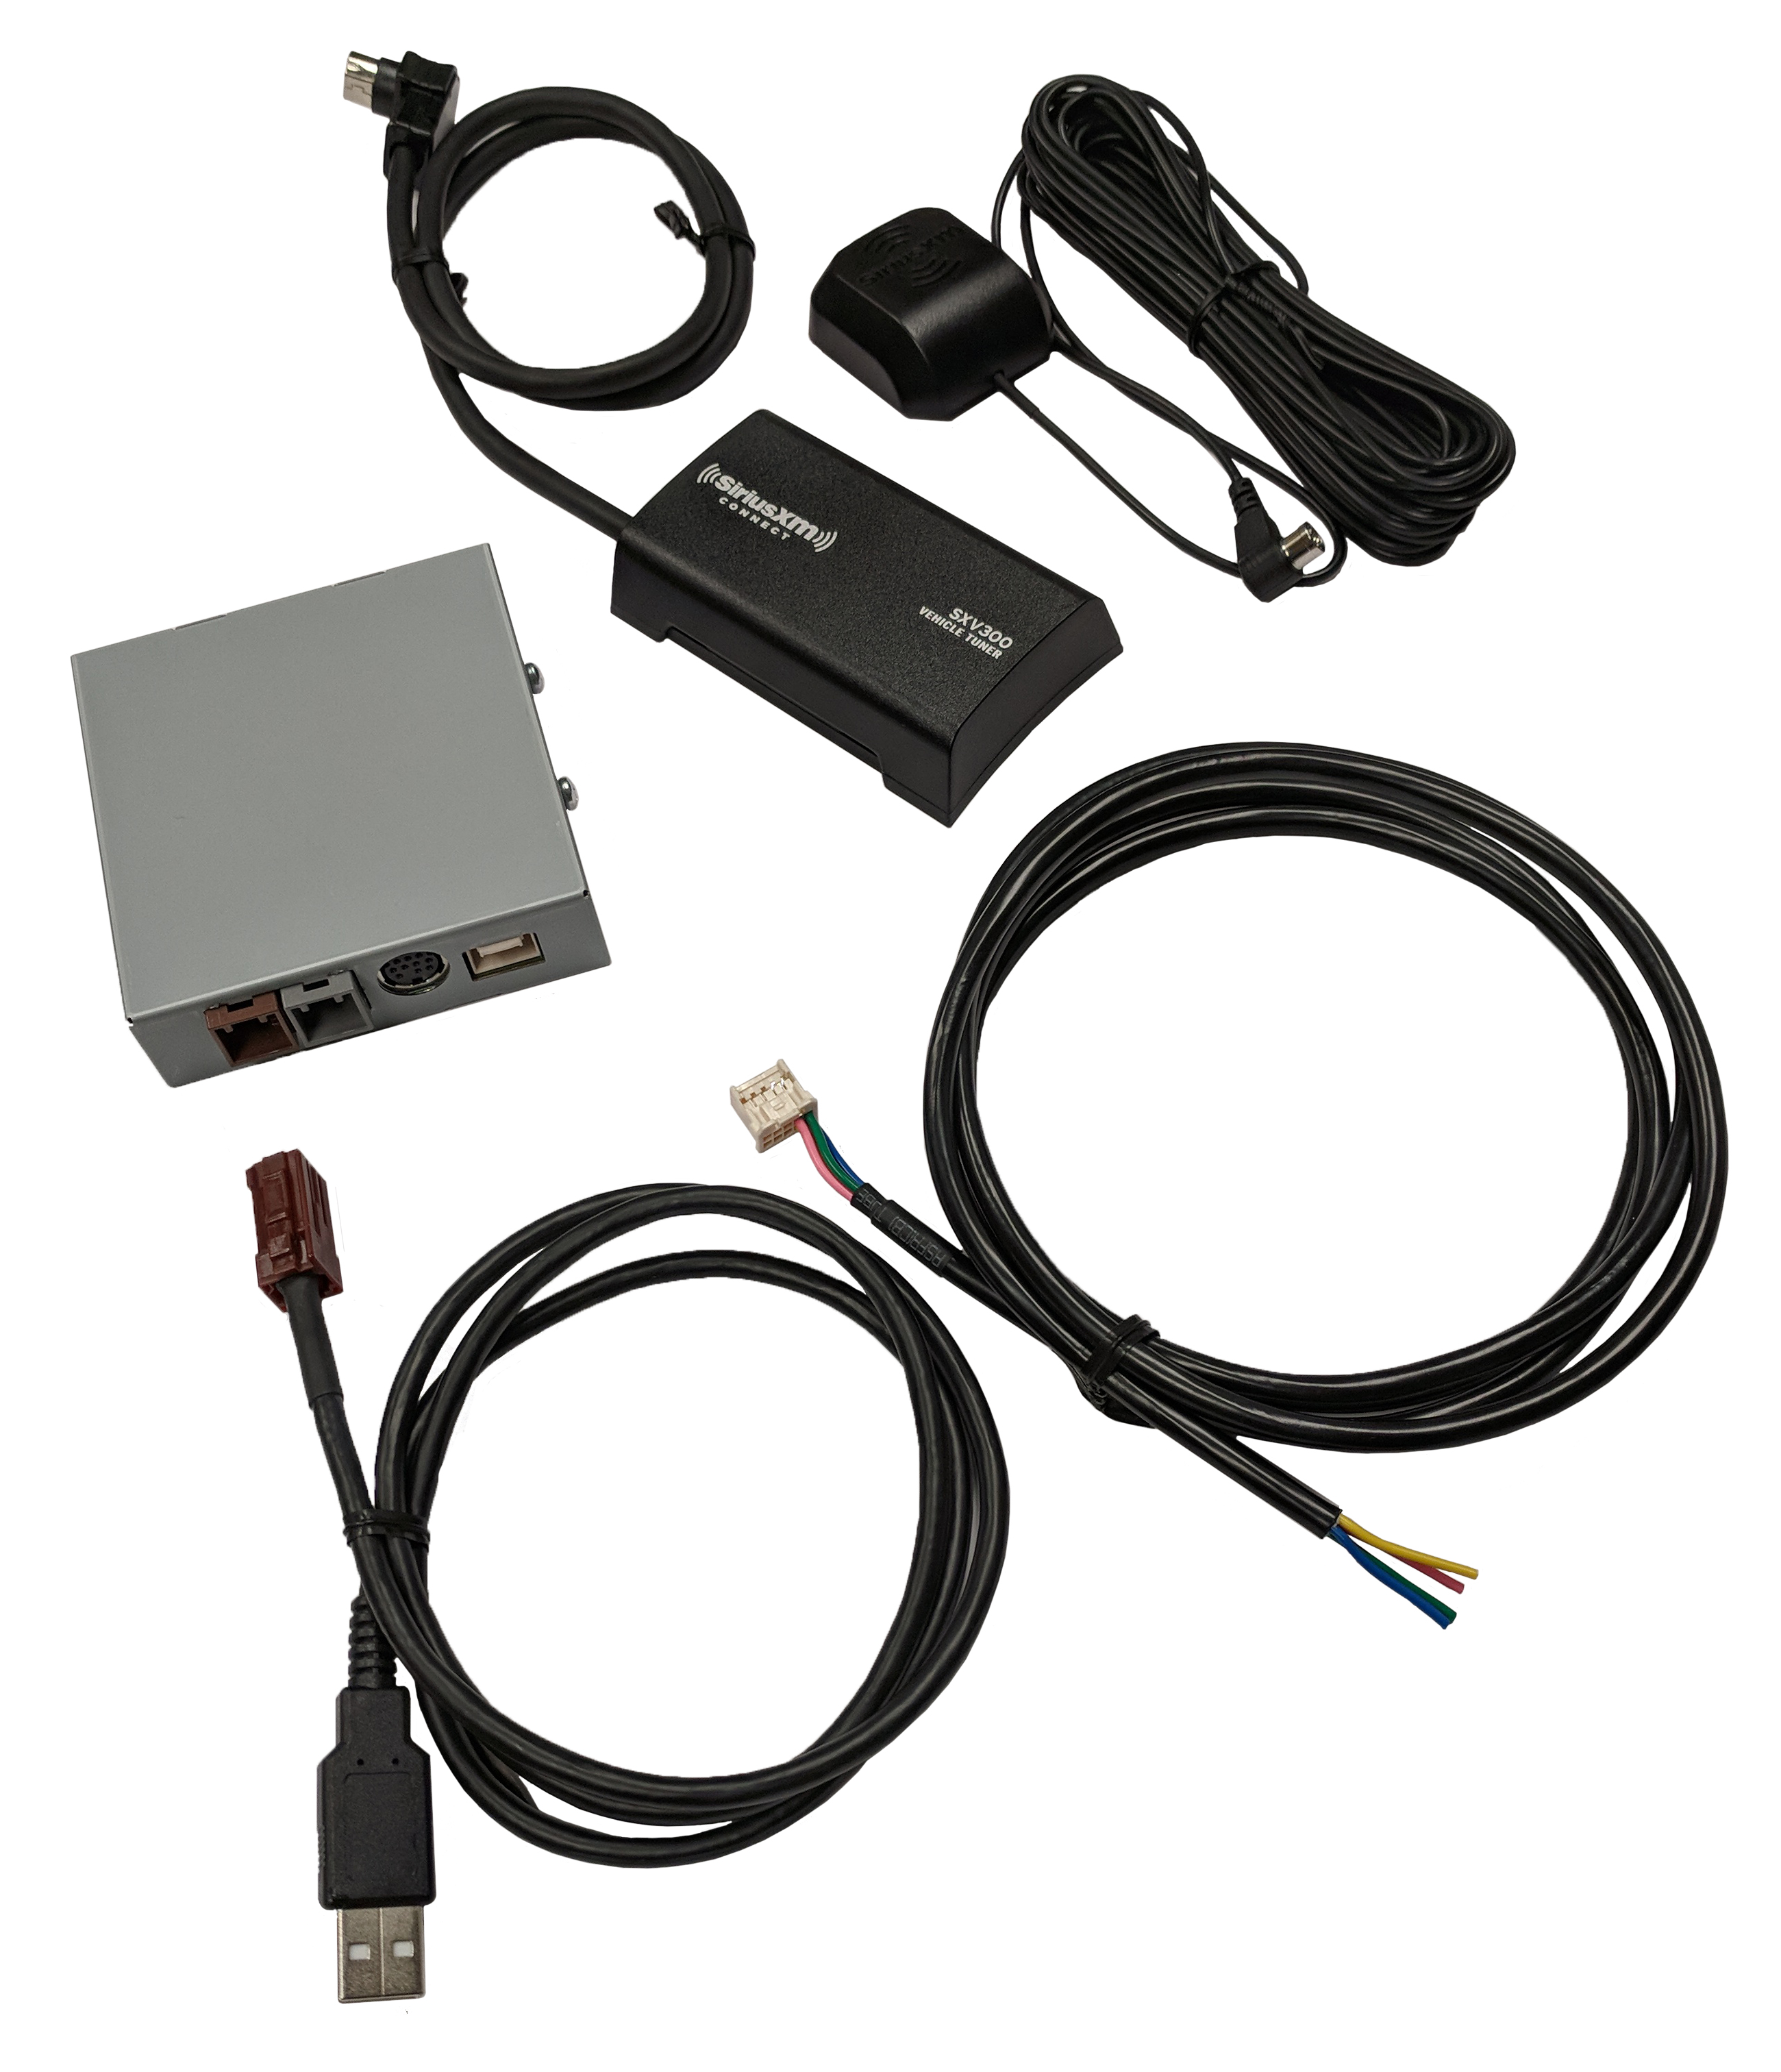 2018+ GM SiriusXM Satellite Radio Kit for USB data port